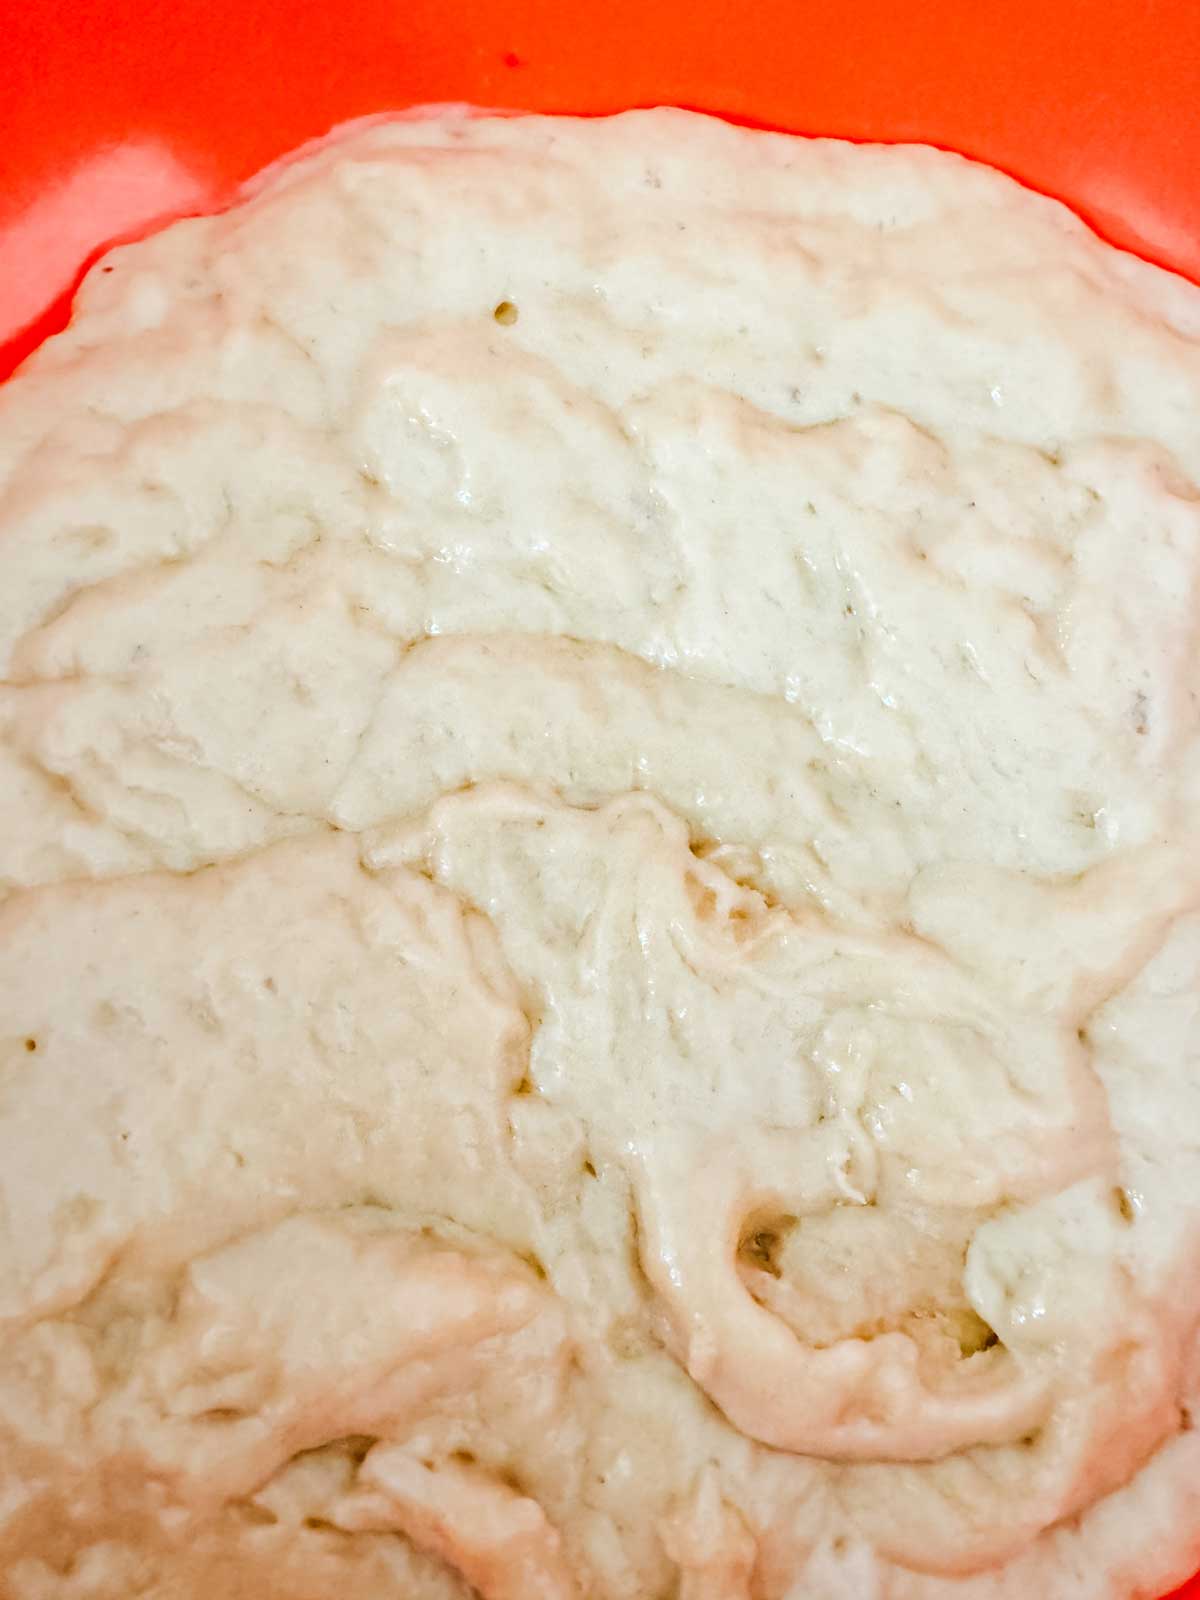 Wet brioche dough in an orange bowl ready for refrigeration.